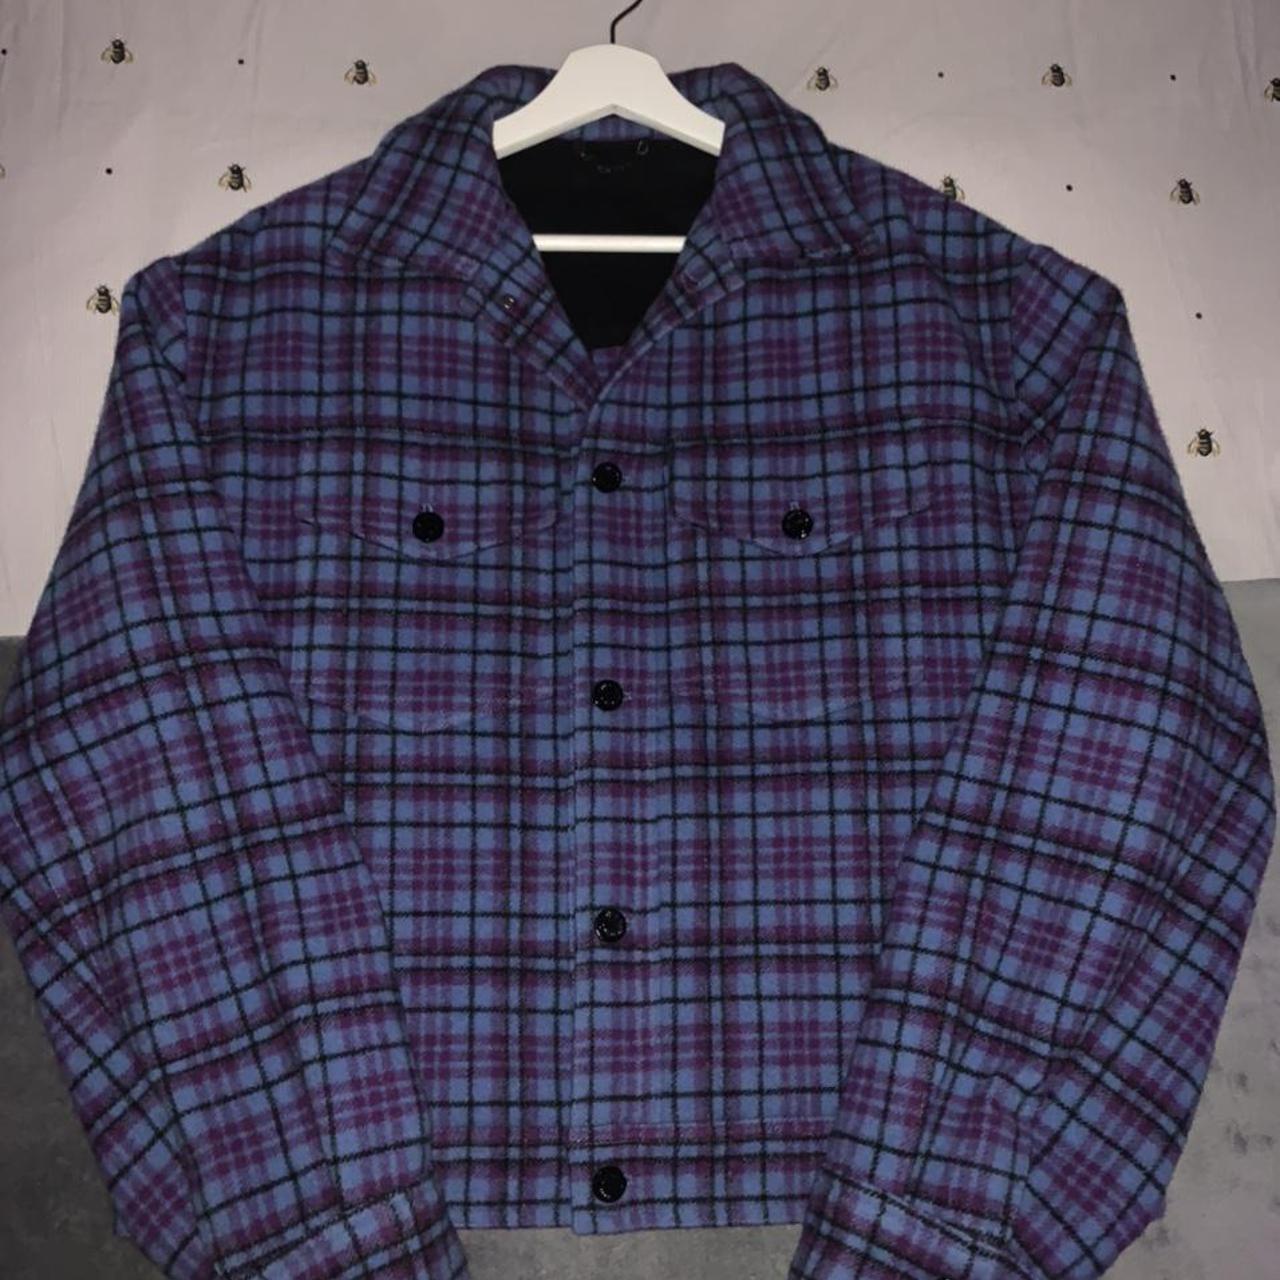 New Louis Vuitton Jacket #louisvuitton #jacket #fashion